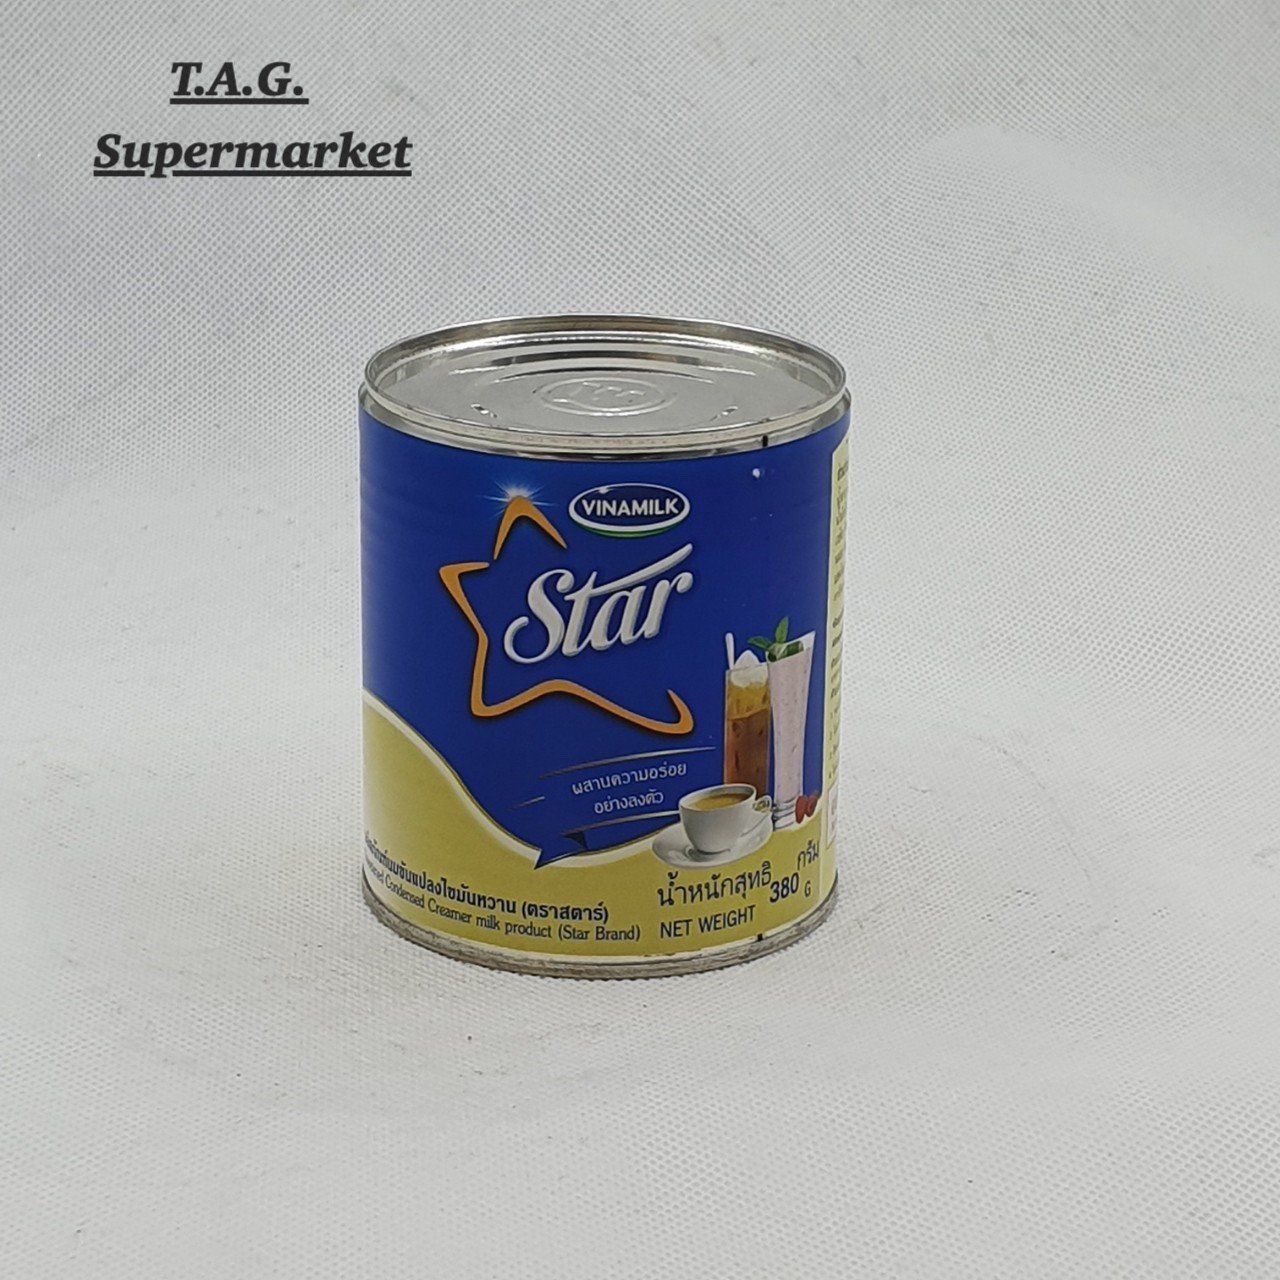 star condensed milk